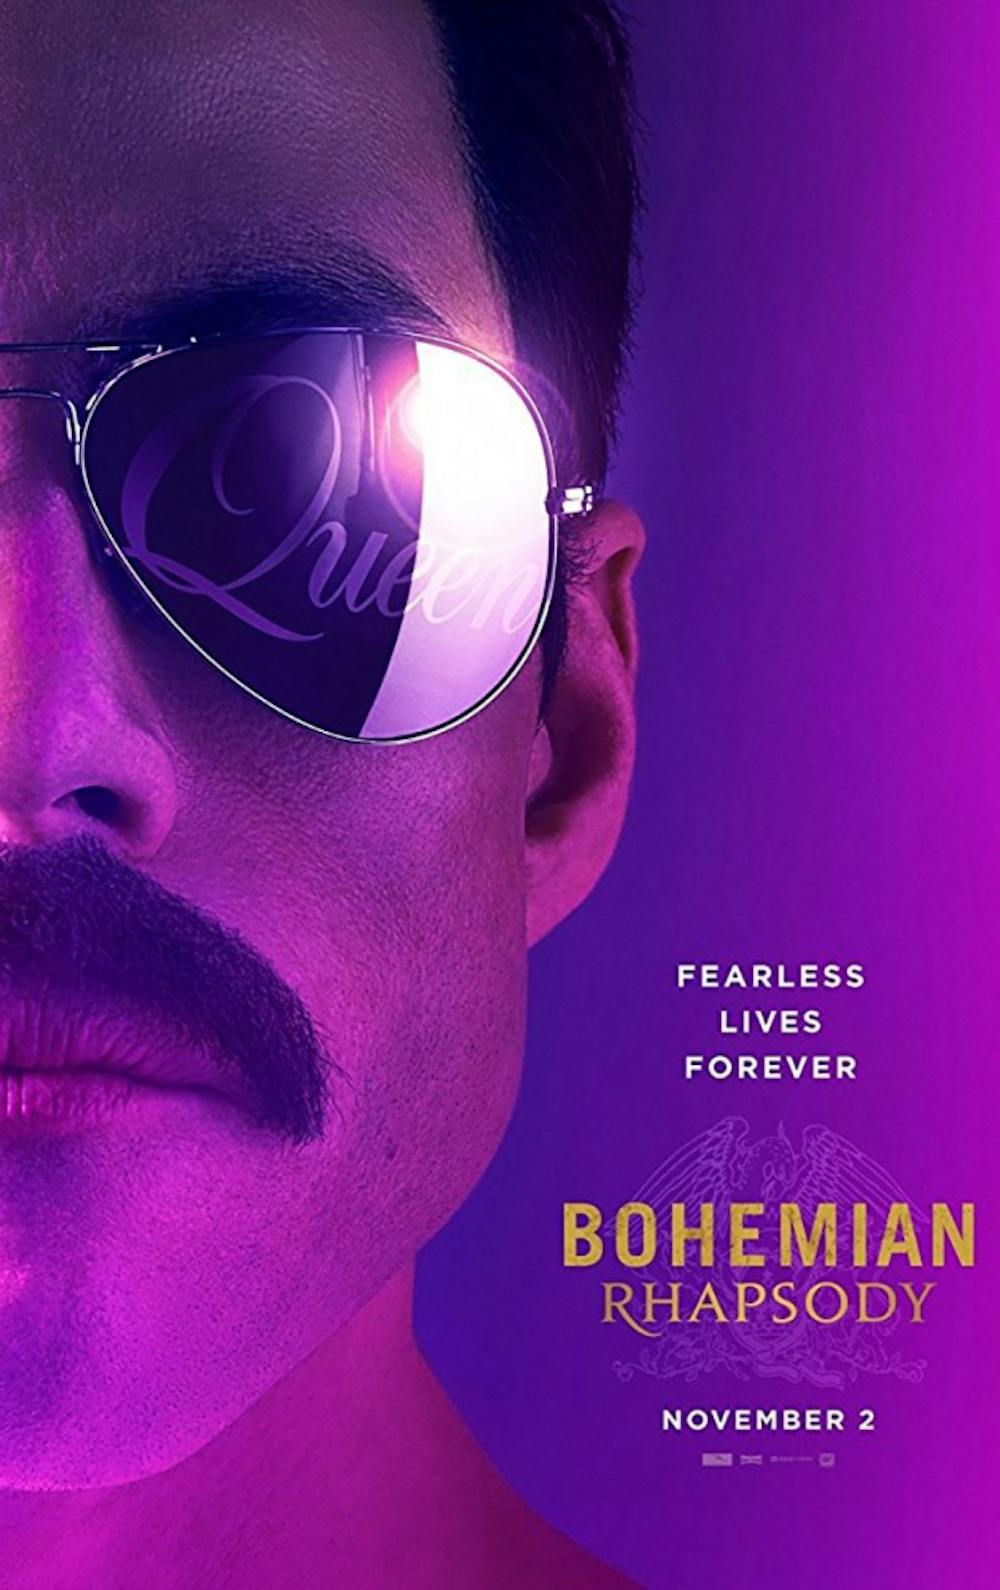 <p>The movie “Bohemian Rhapsody” will be released Nov. 2, 2018.</p>